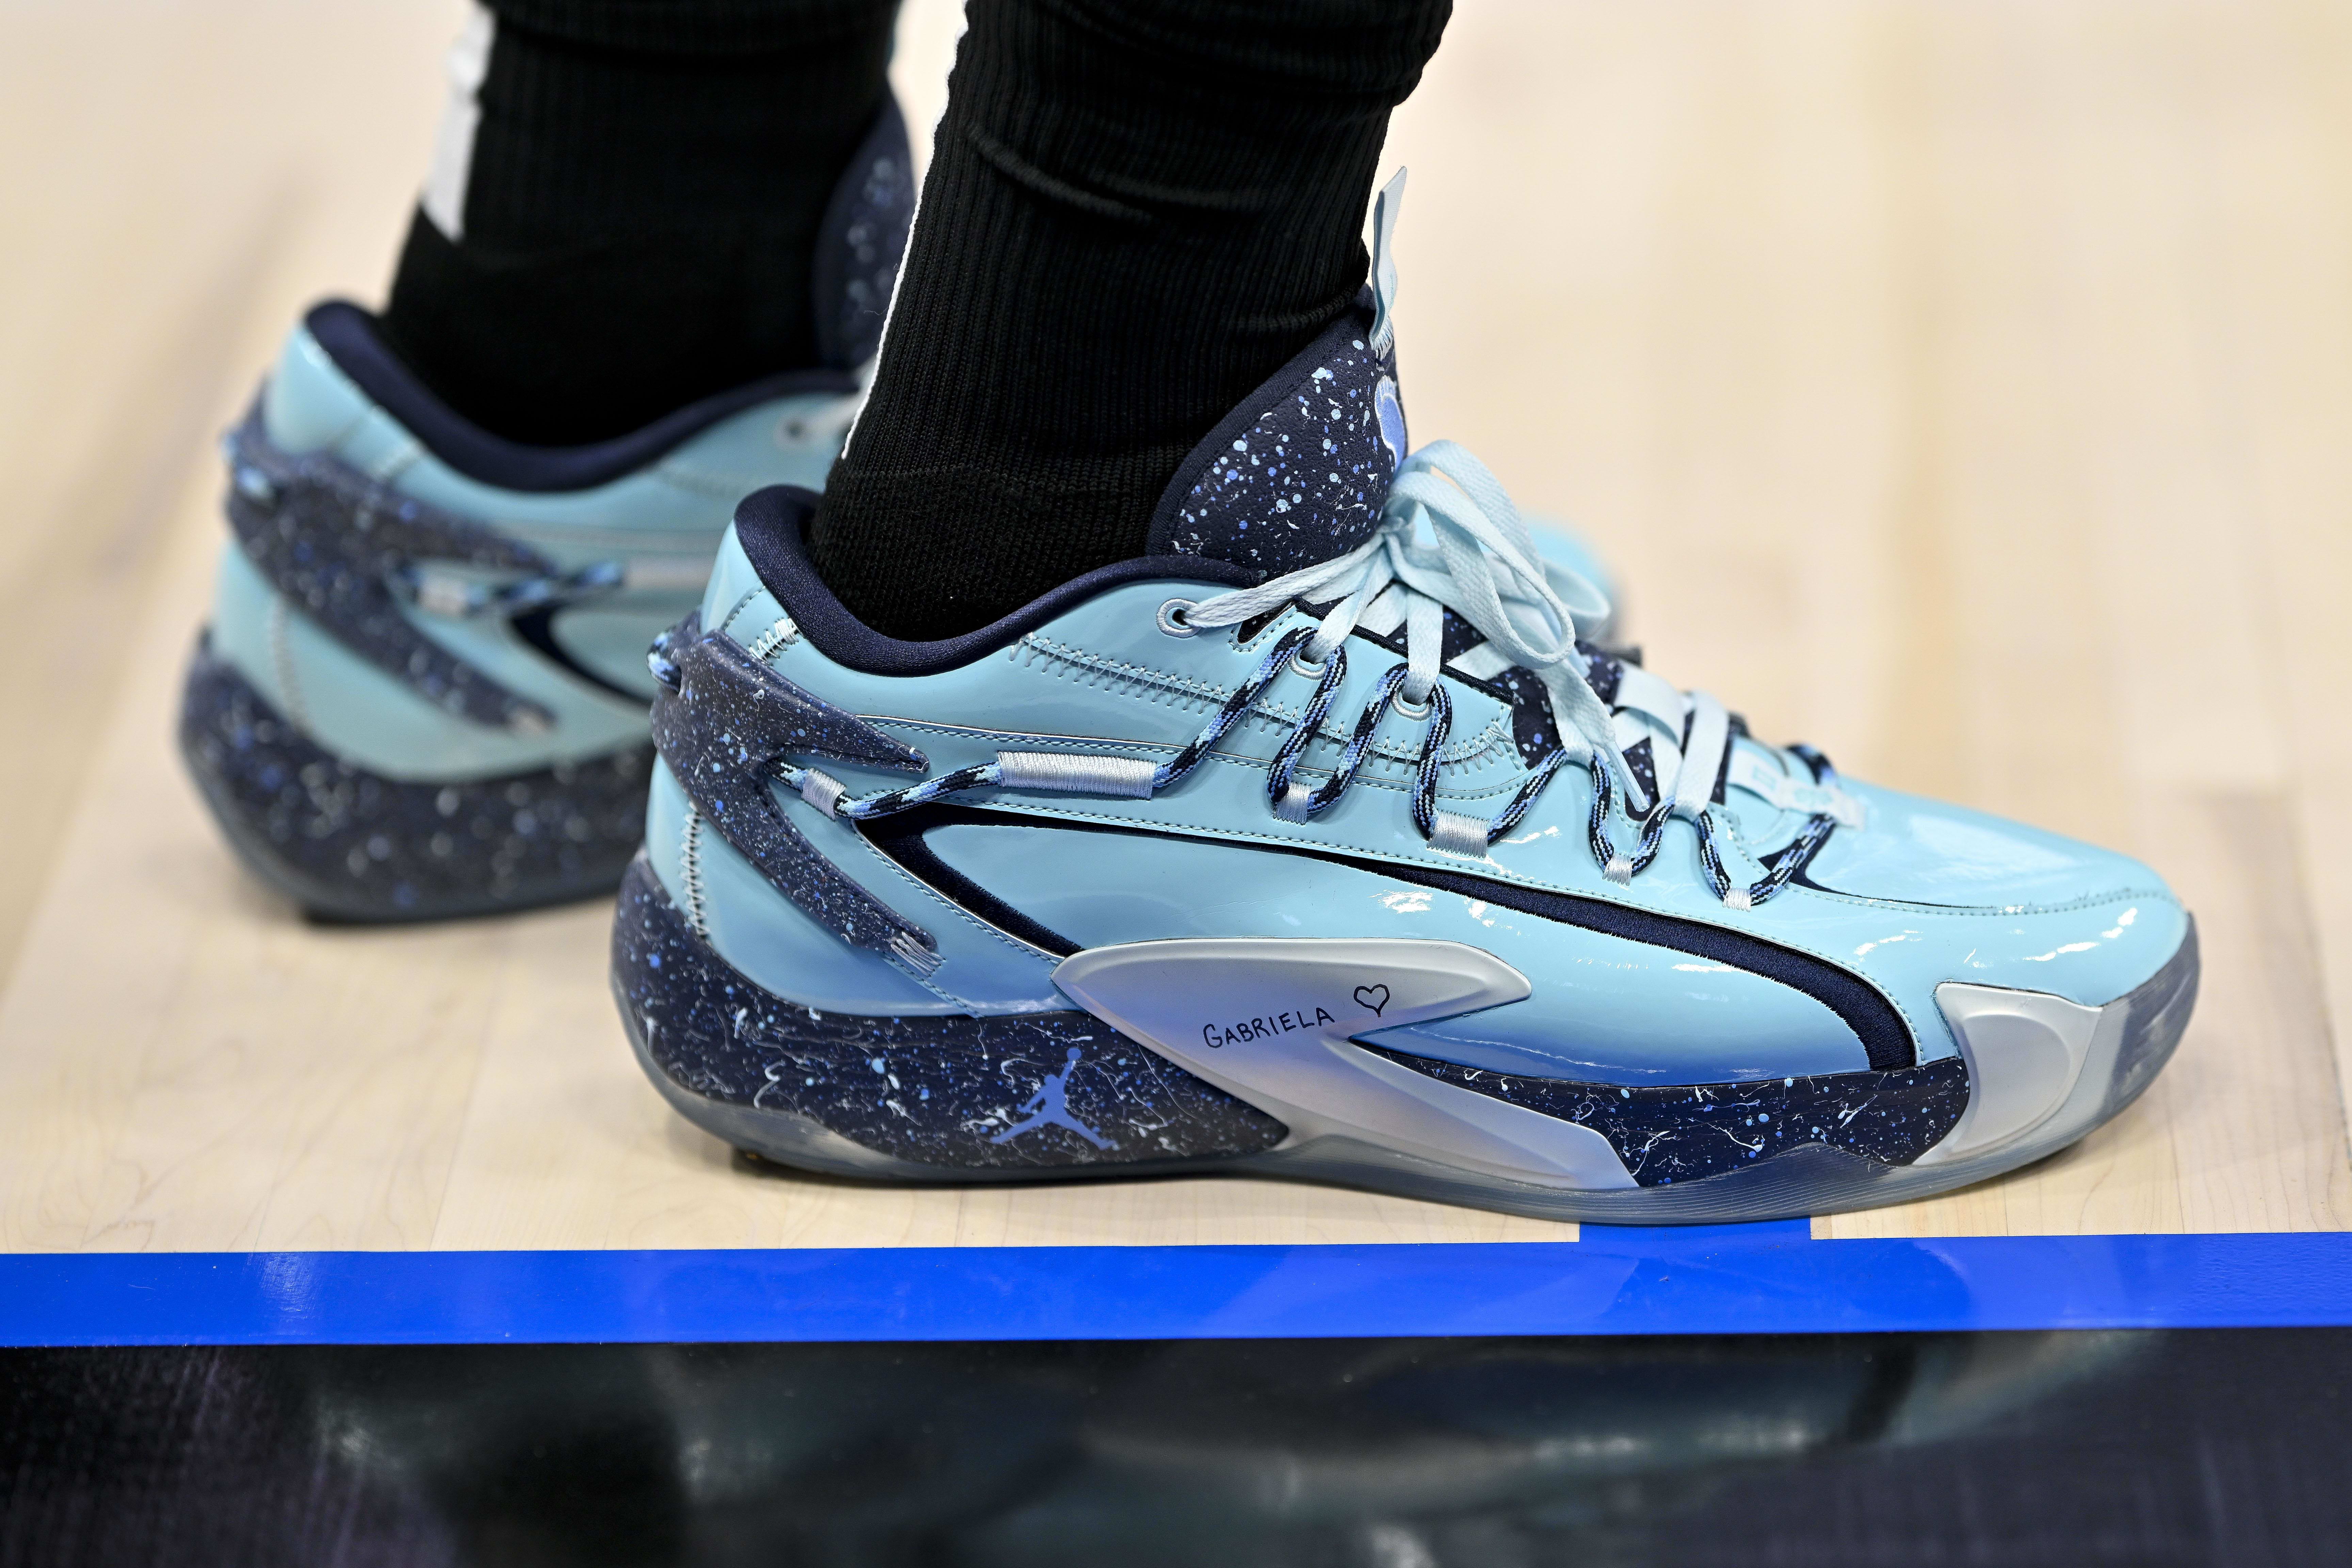 Dallas Mavericks guard Luka Doncic's blue Jordan Brand sneakers.